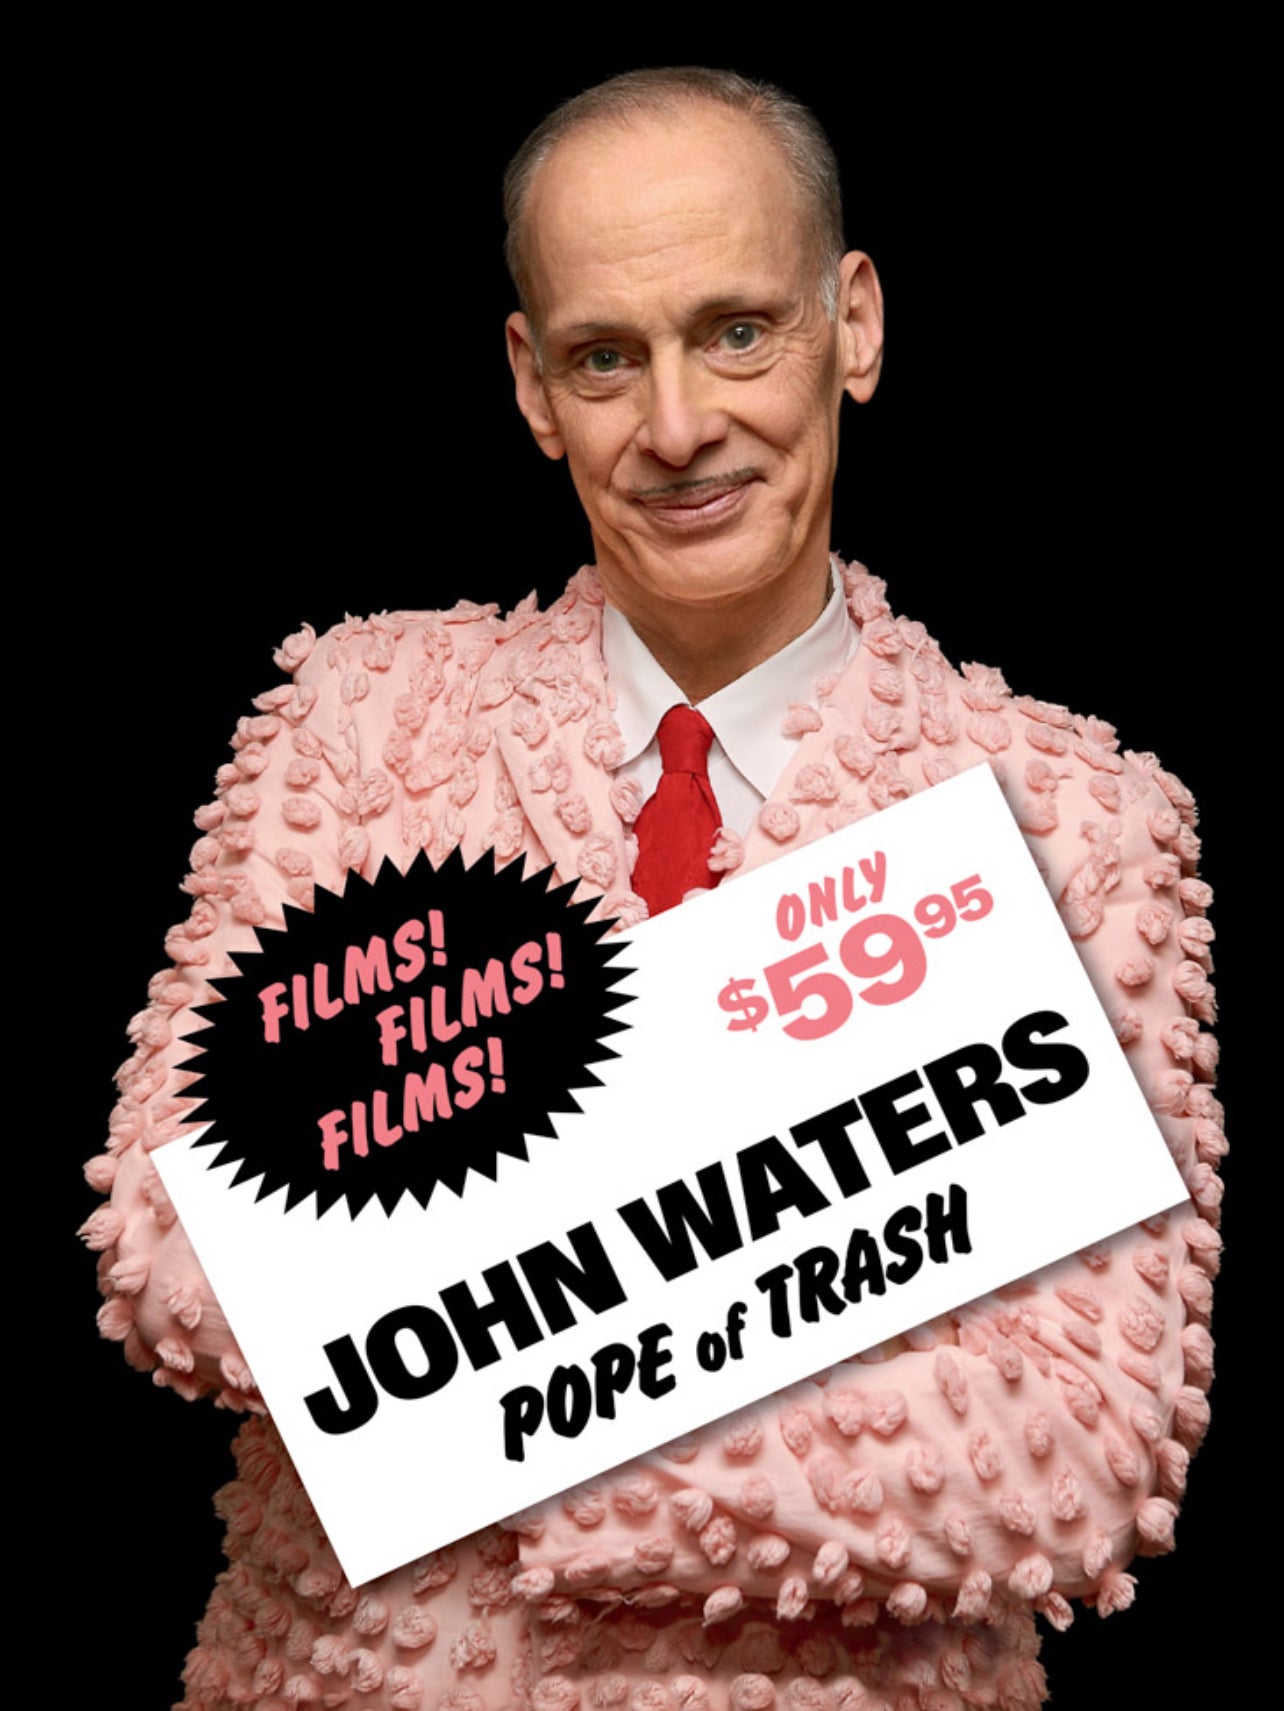 John Waters: Pope of Trash